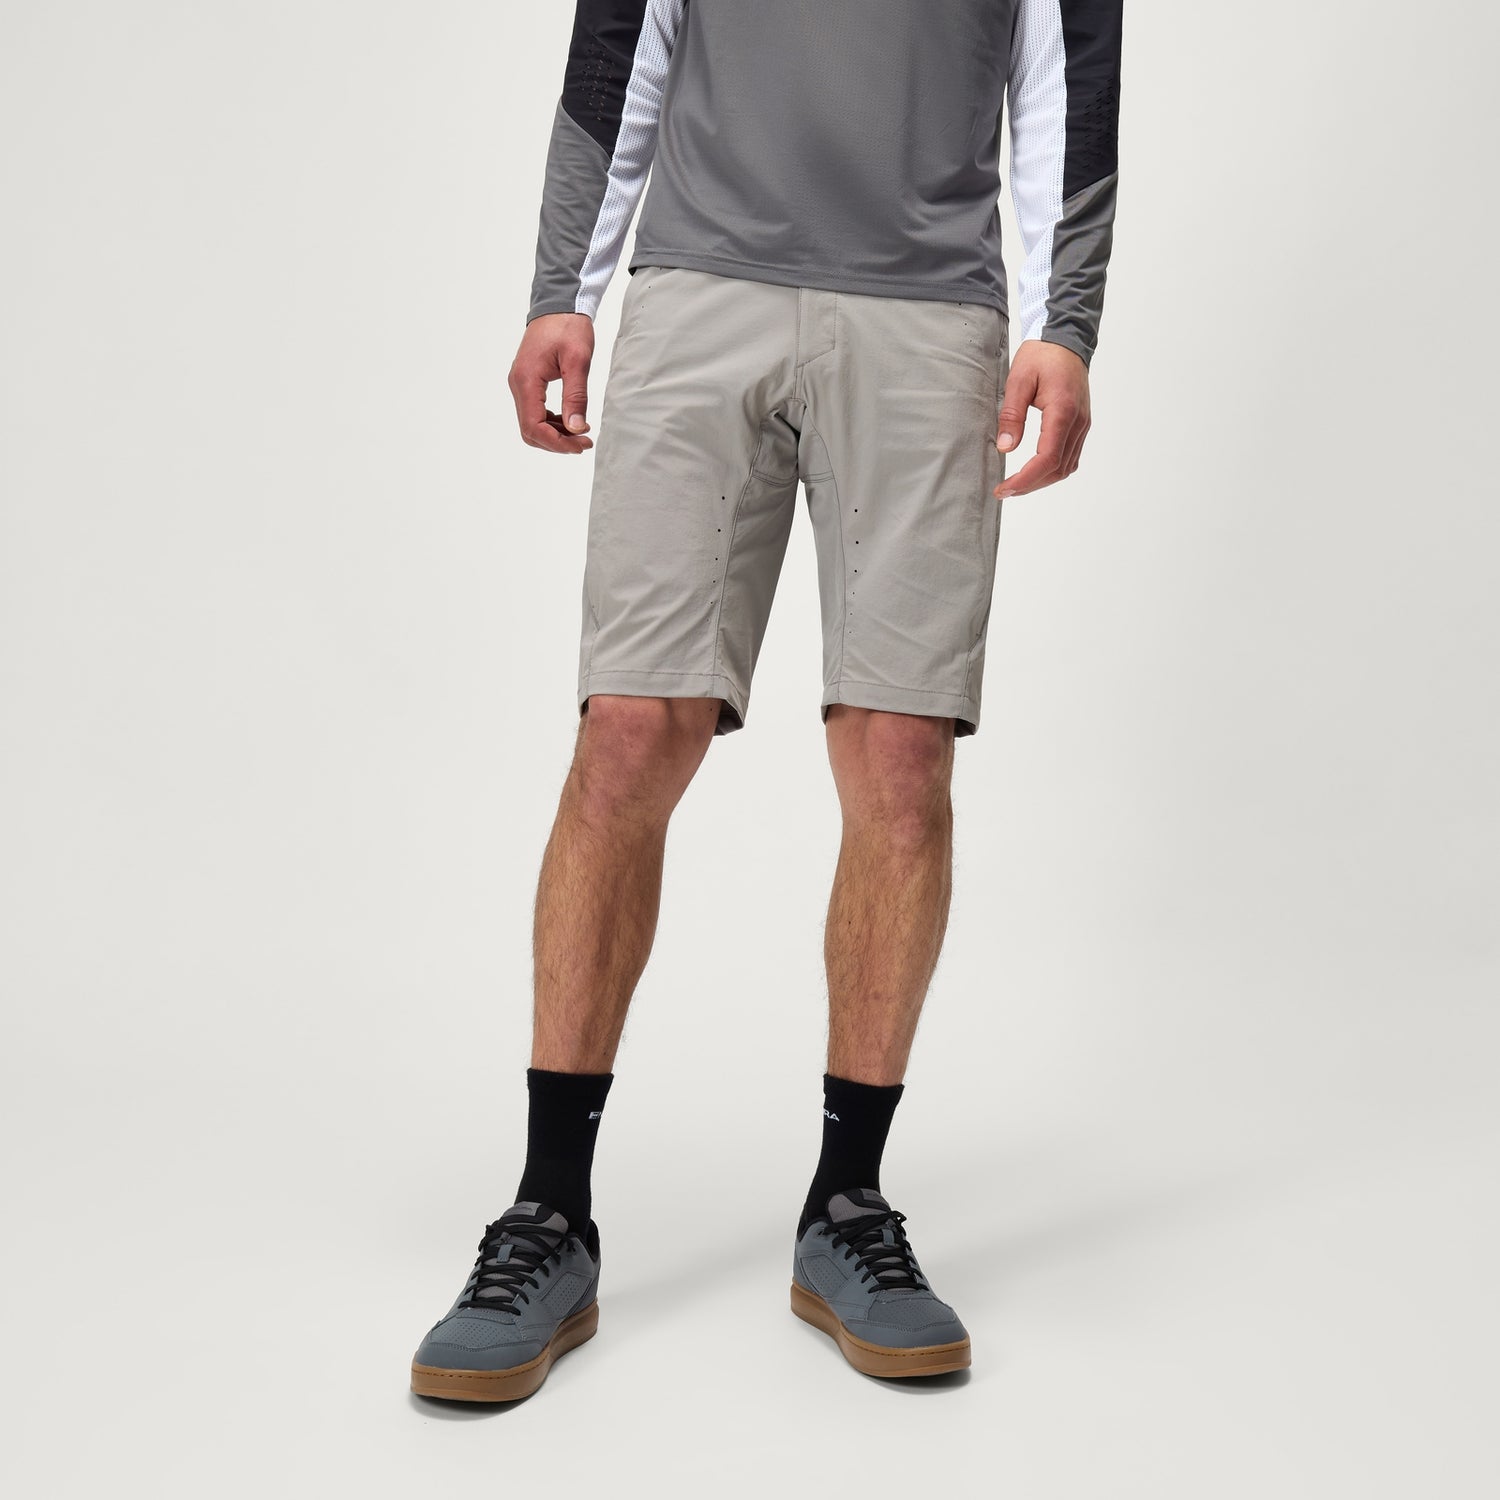 Men's GV500 Foyle Shorts - Fossil - XXL